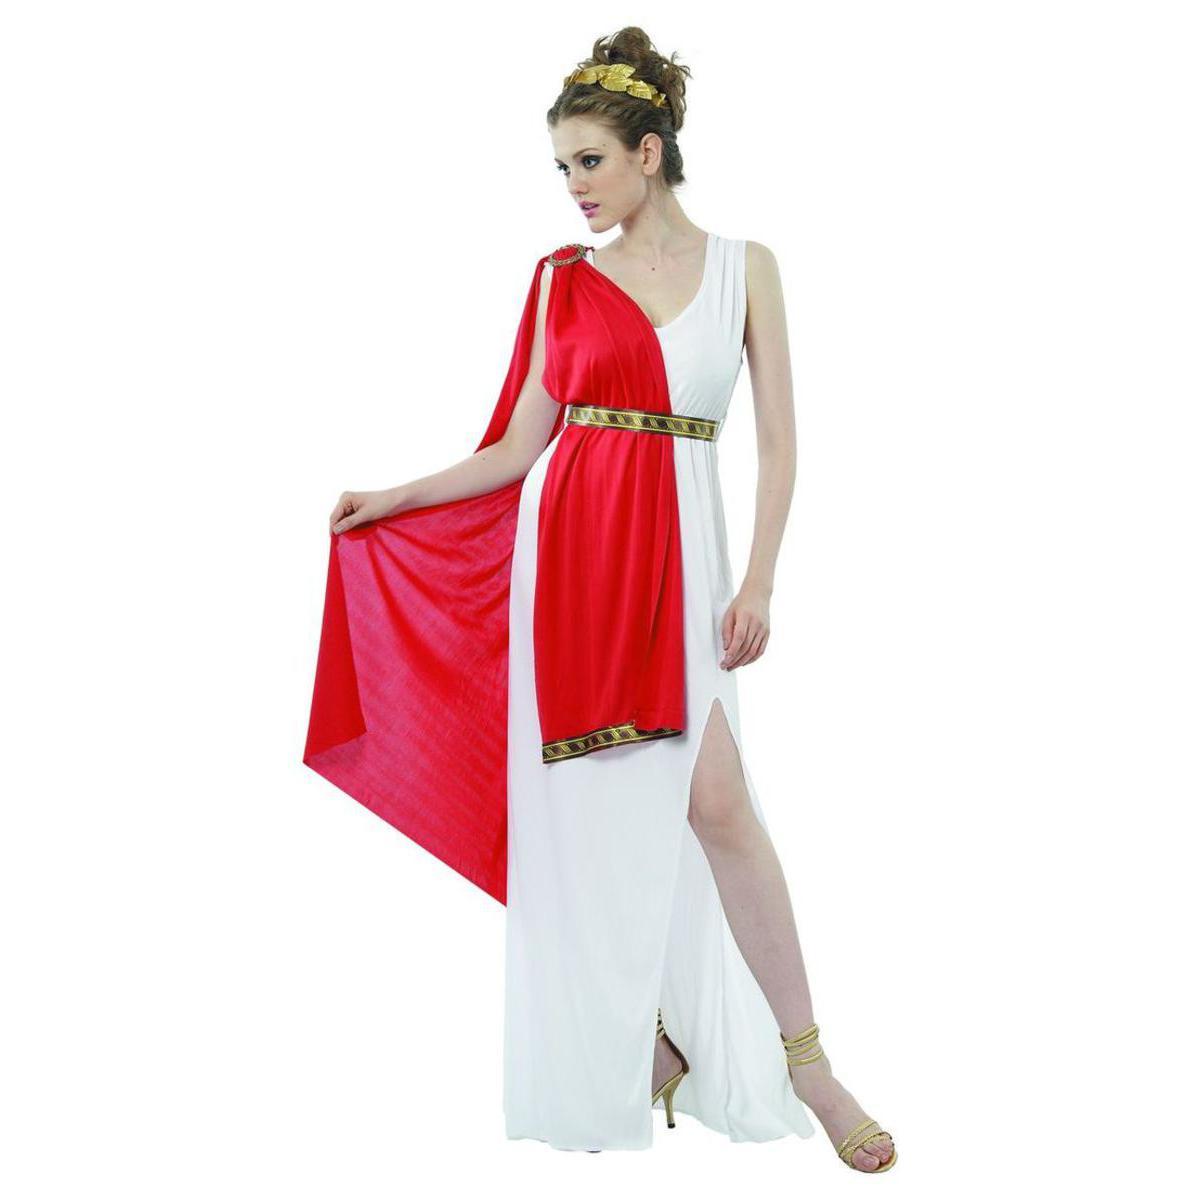 Costume adulte de romaine en polyester - Taille unique - Multicolore